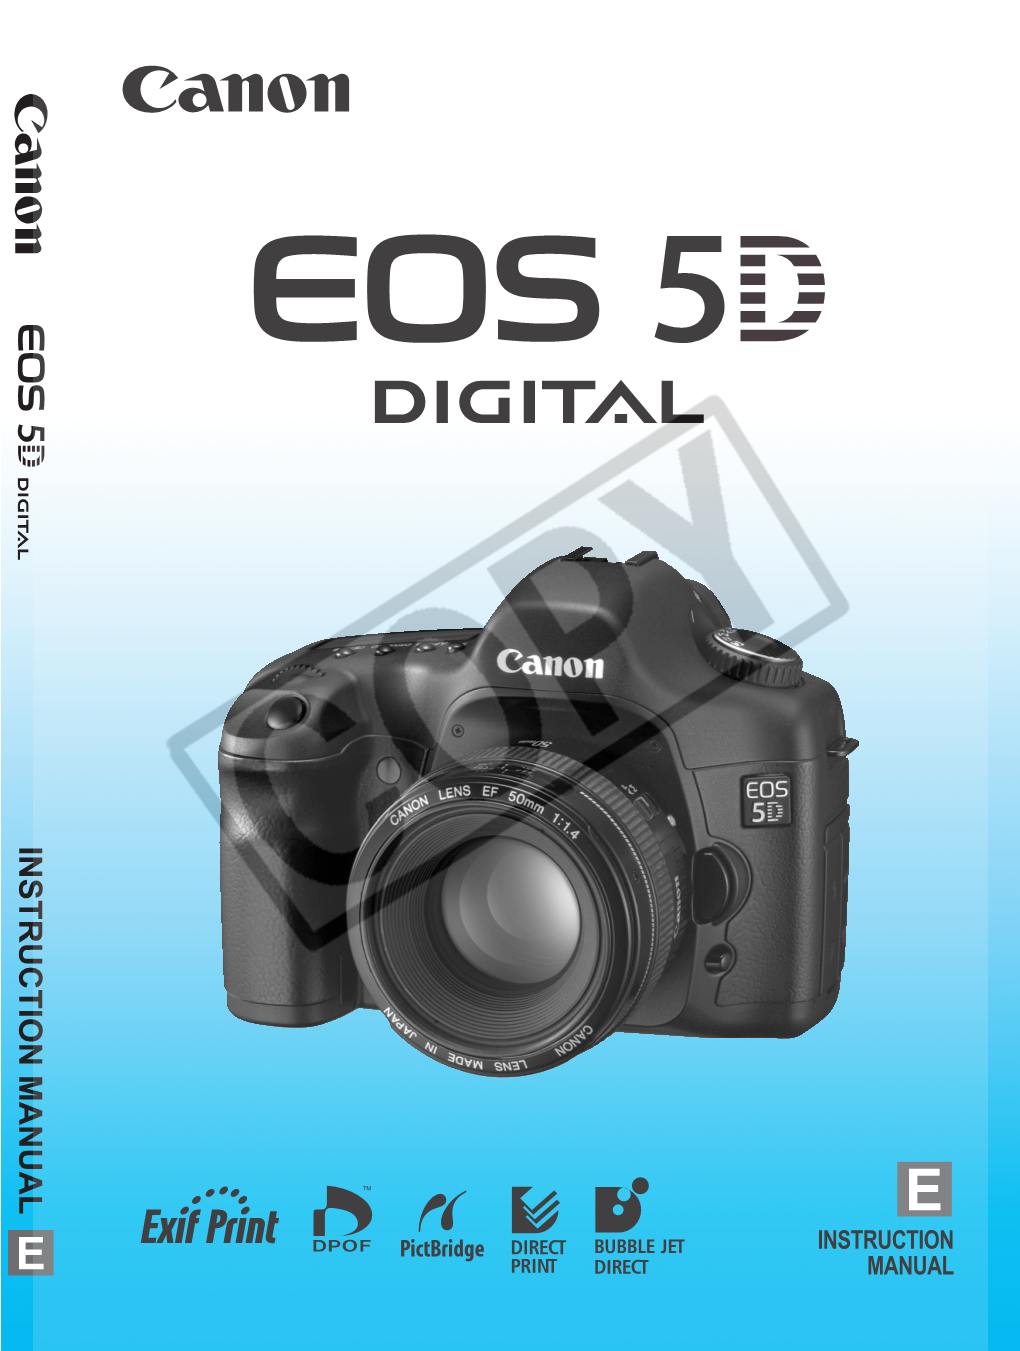 EOS 5D Is a High-Performance, Digital AF SLR Camera with a Large, 35.8 X 23.9Mm CMOS Sensor with 12.8 Effective Megapixels